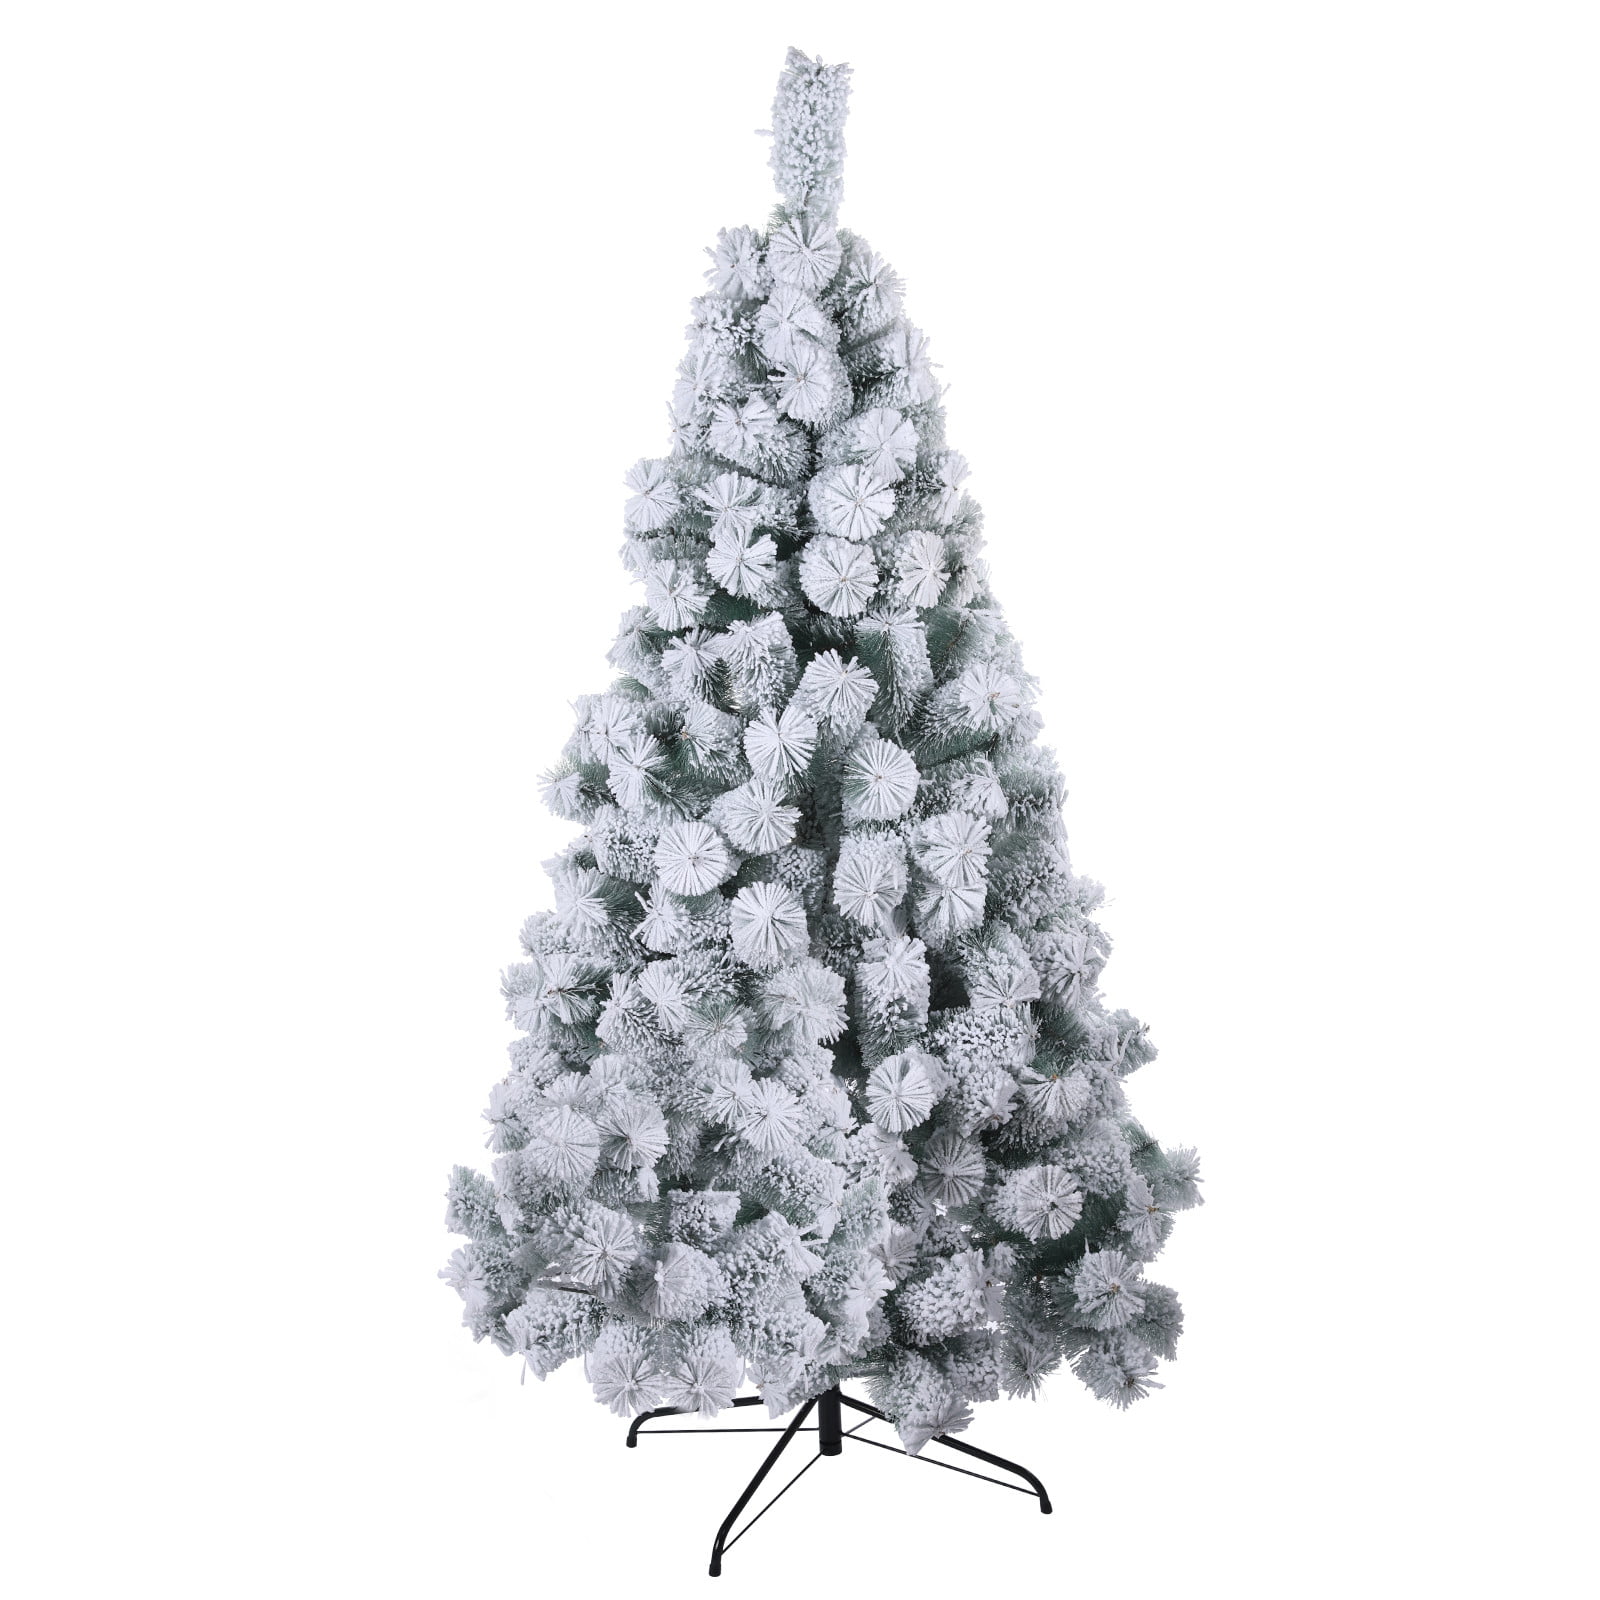 Details about   Christmas Tree arbol de navidad New Year's Mini Christmas Tree Small Pine Tree 